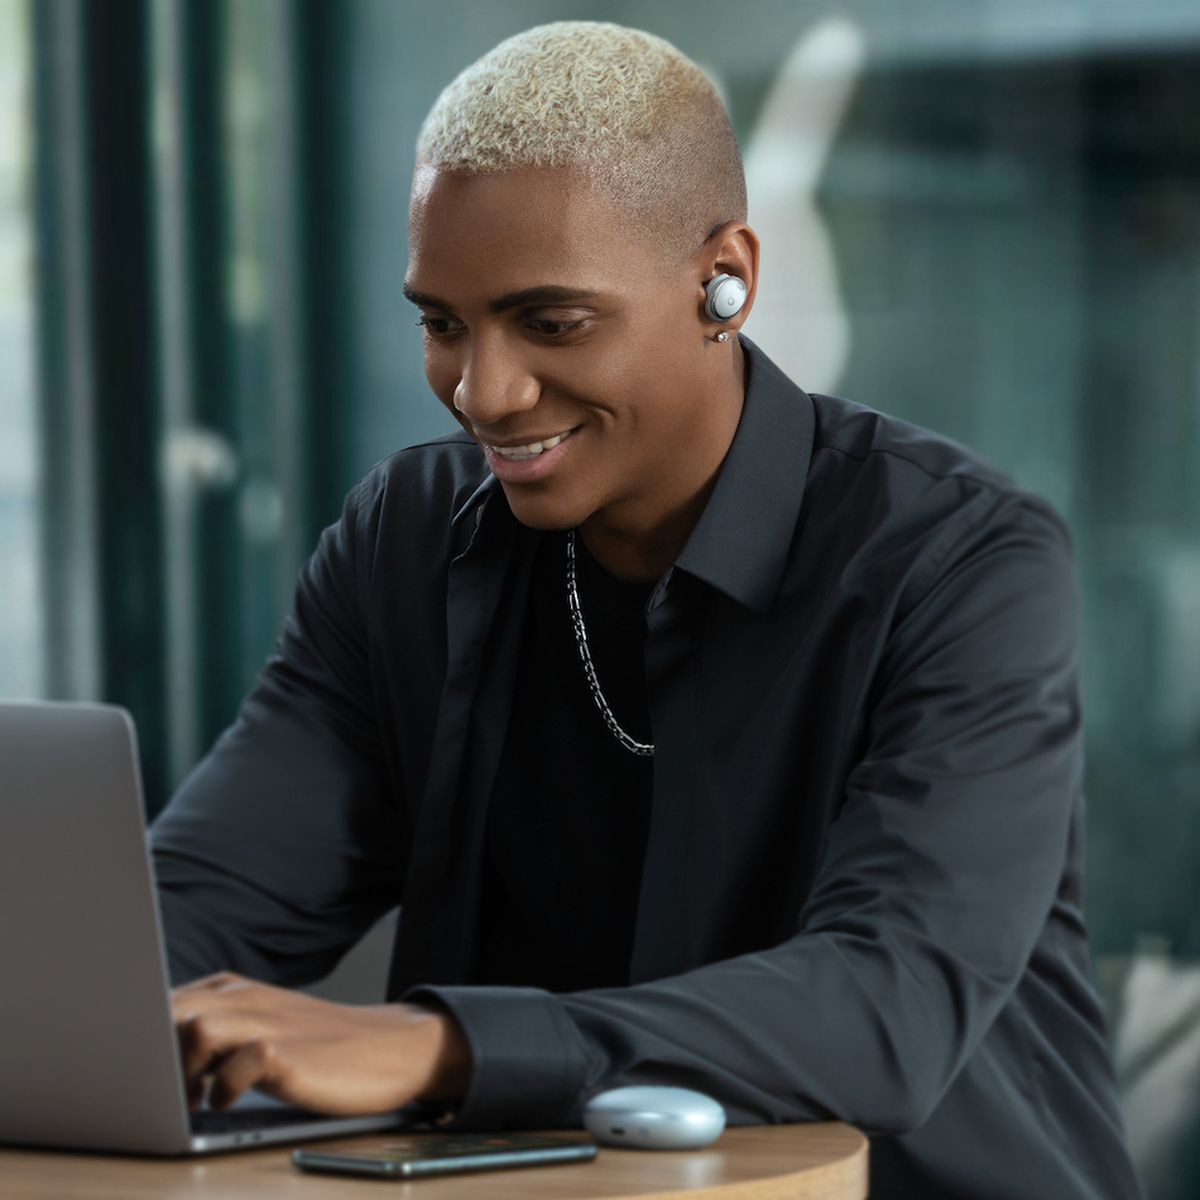 Soundcore Launches Next Generation Liberty 3 Pro True Wireless Earbuds